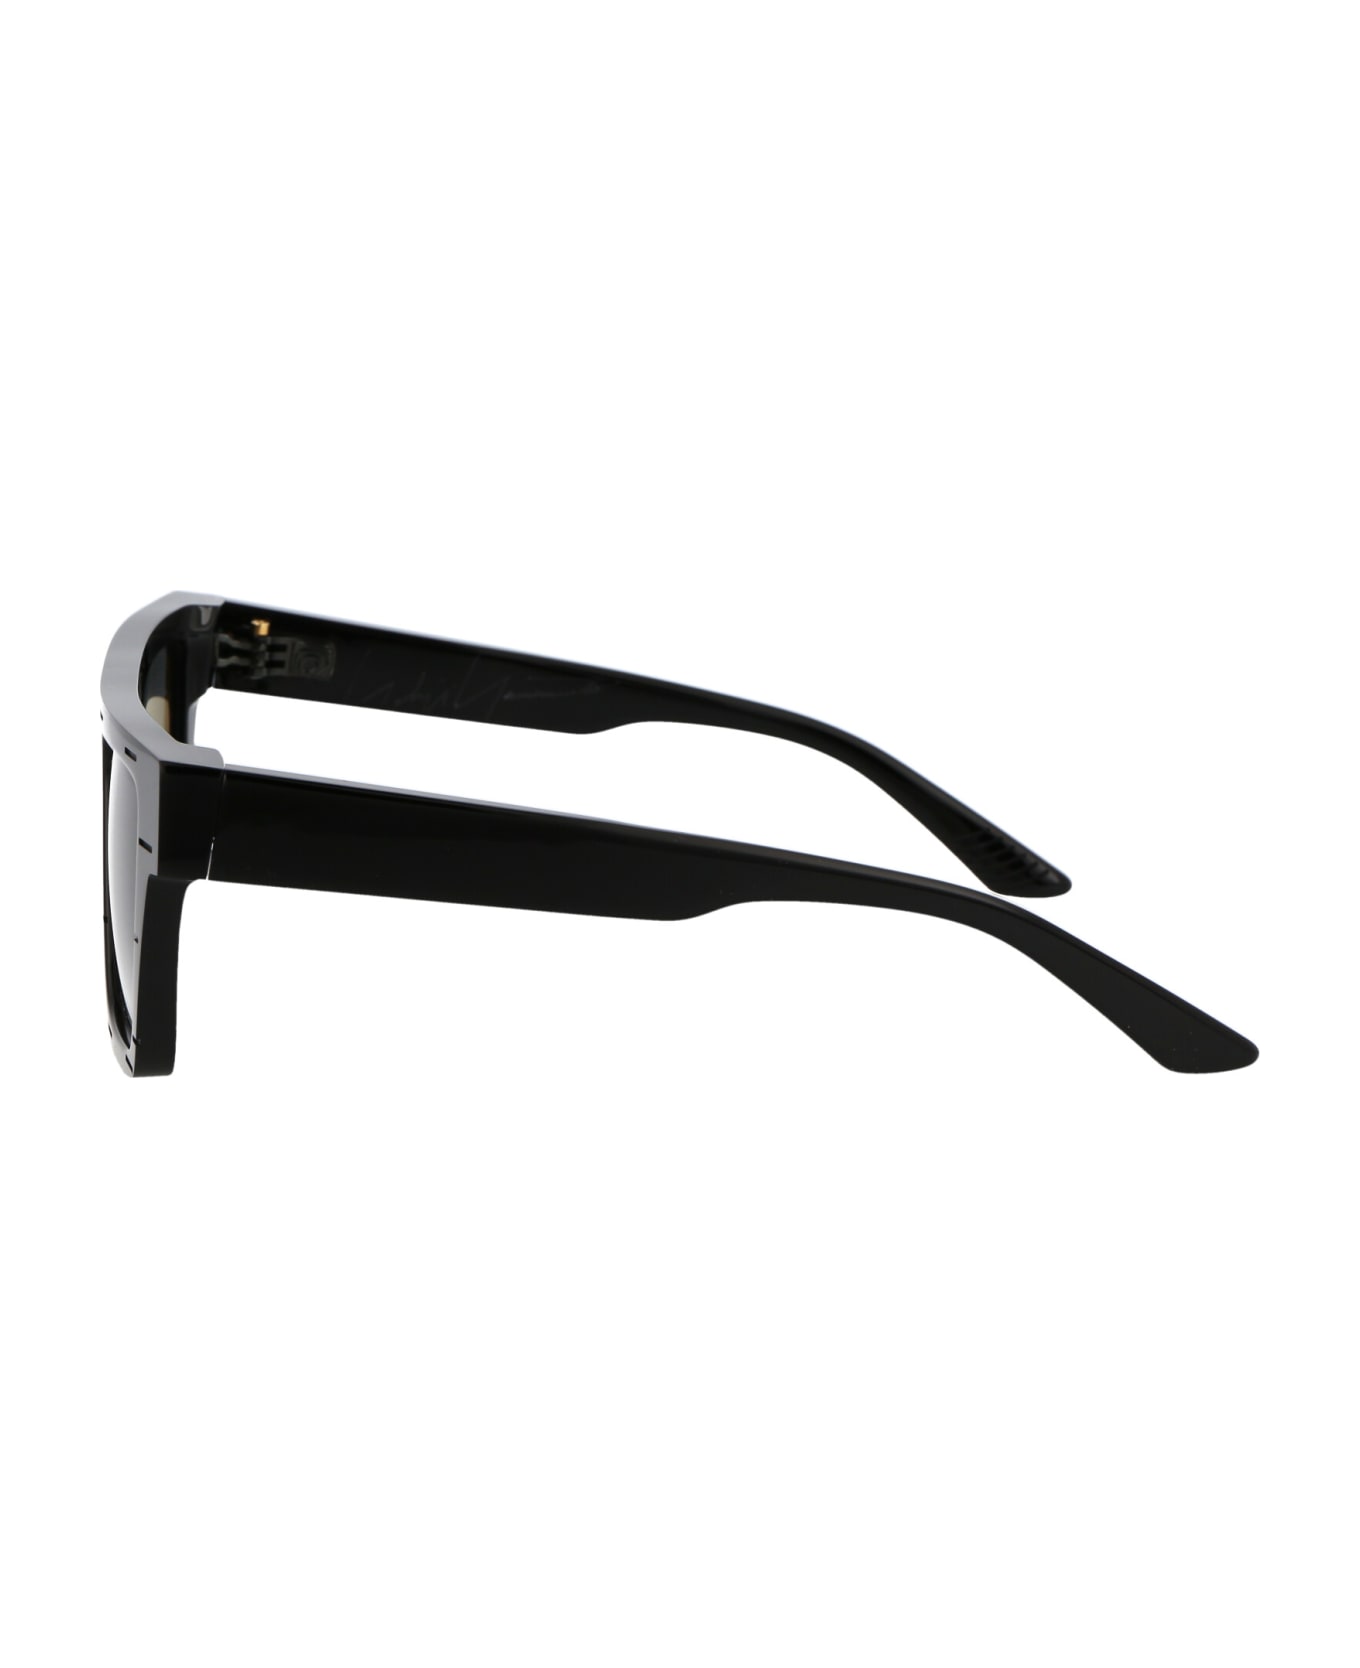 Yohji Yamamoto Slook 002 Sunglasses - A001 PURE BLACK/JAPAN GOLD